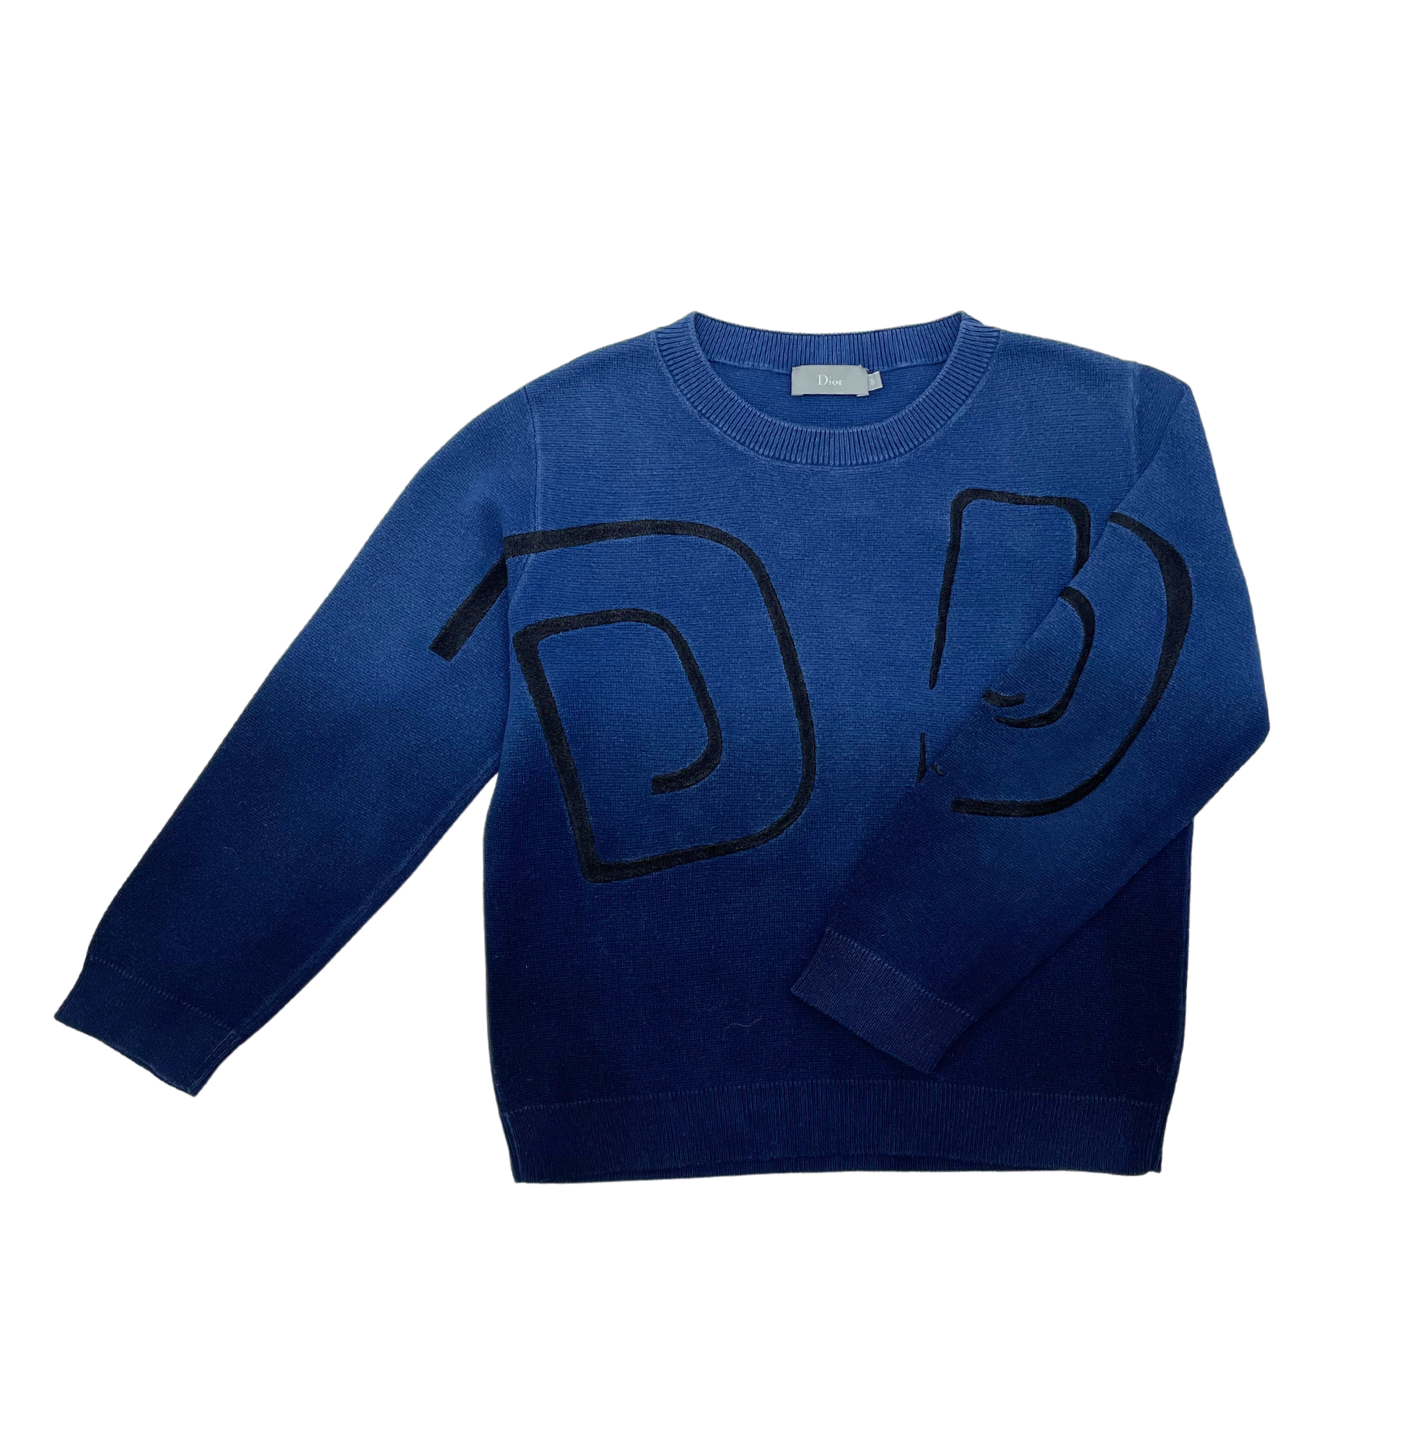 DIOR - Navy sweatshirt - 8 years